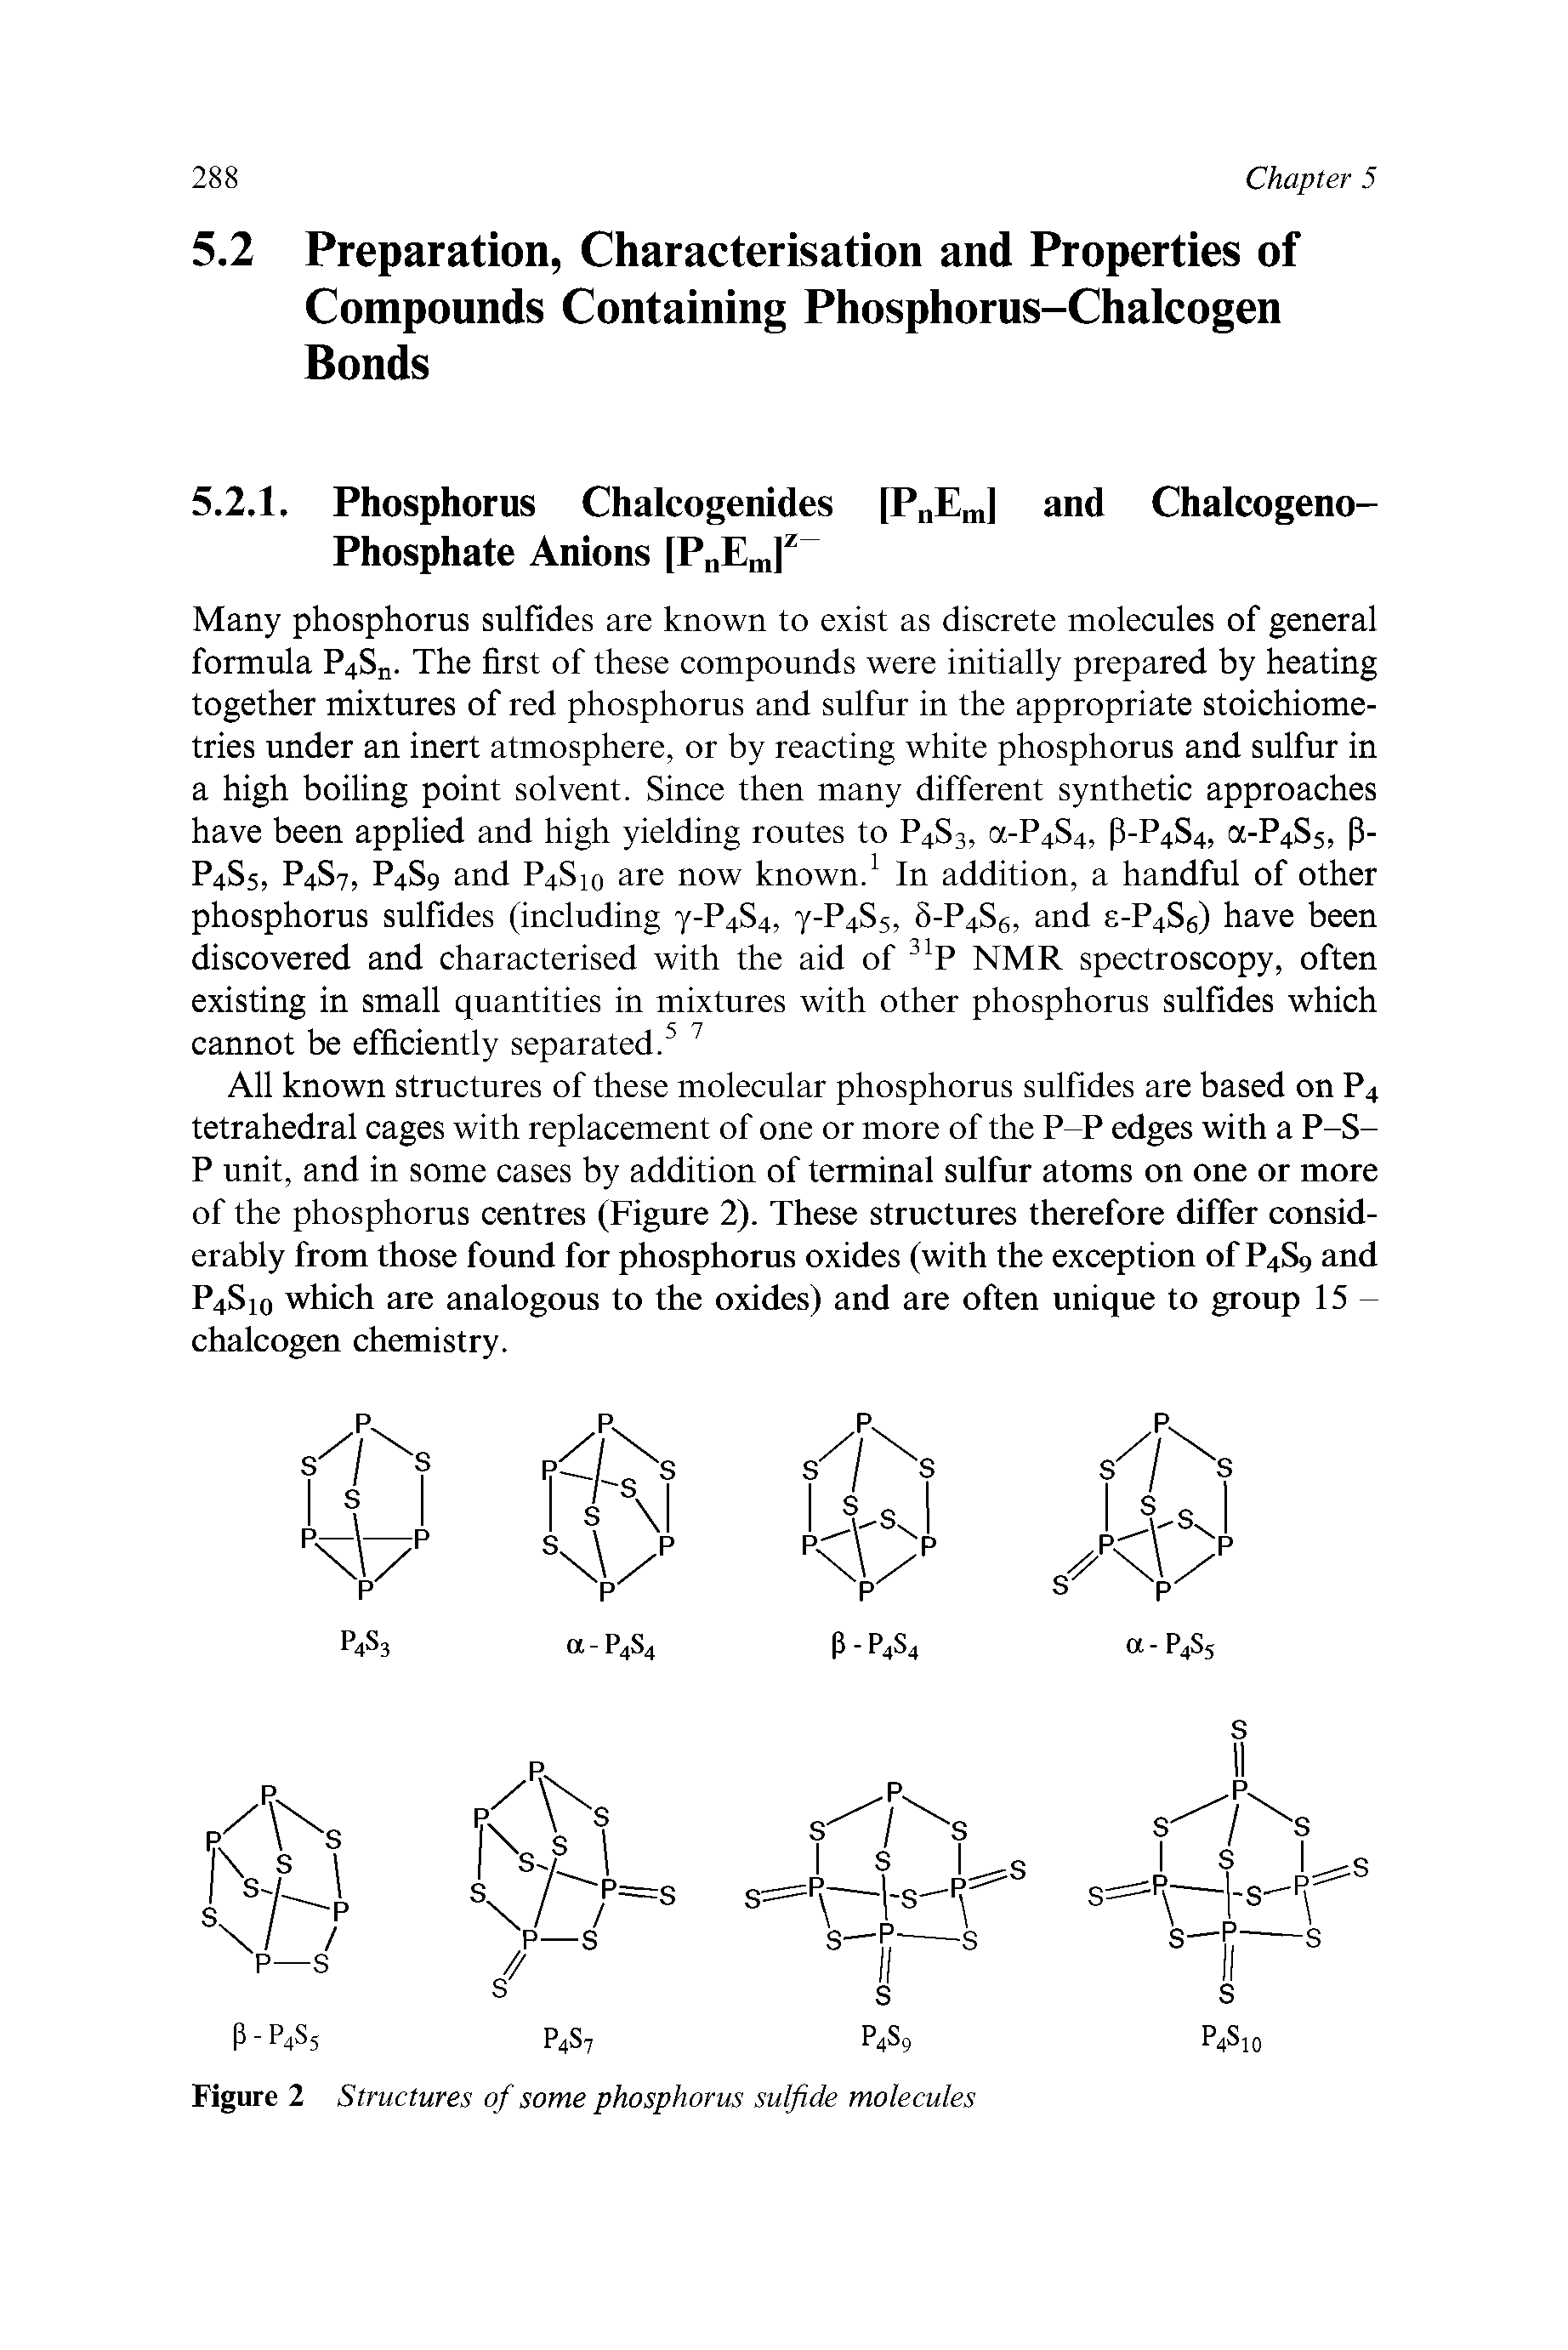 Figure 2 Structures of some phosphorus sulfide molecules...